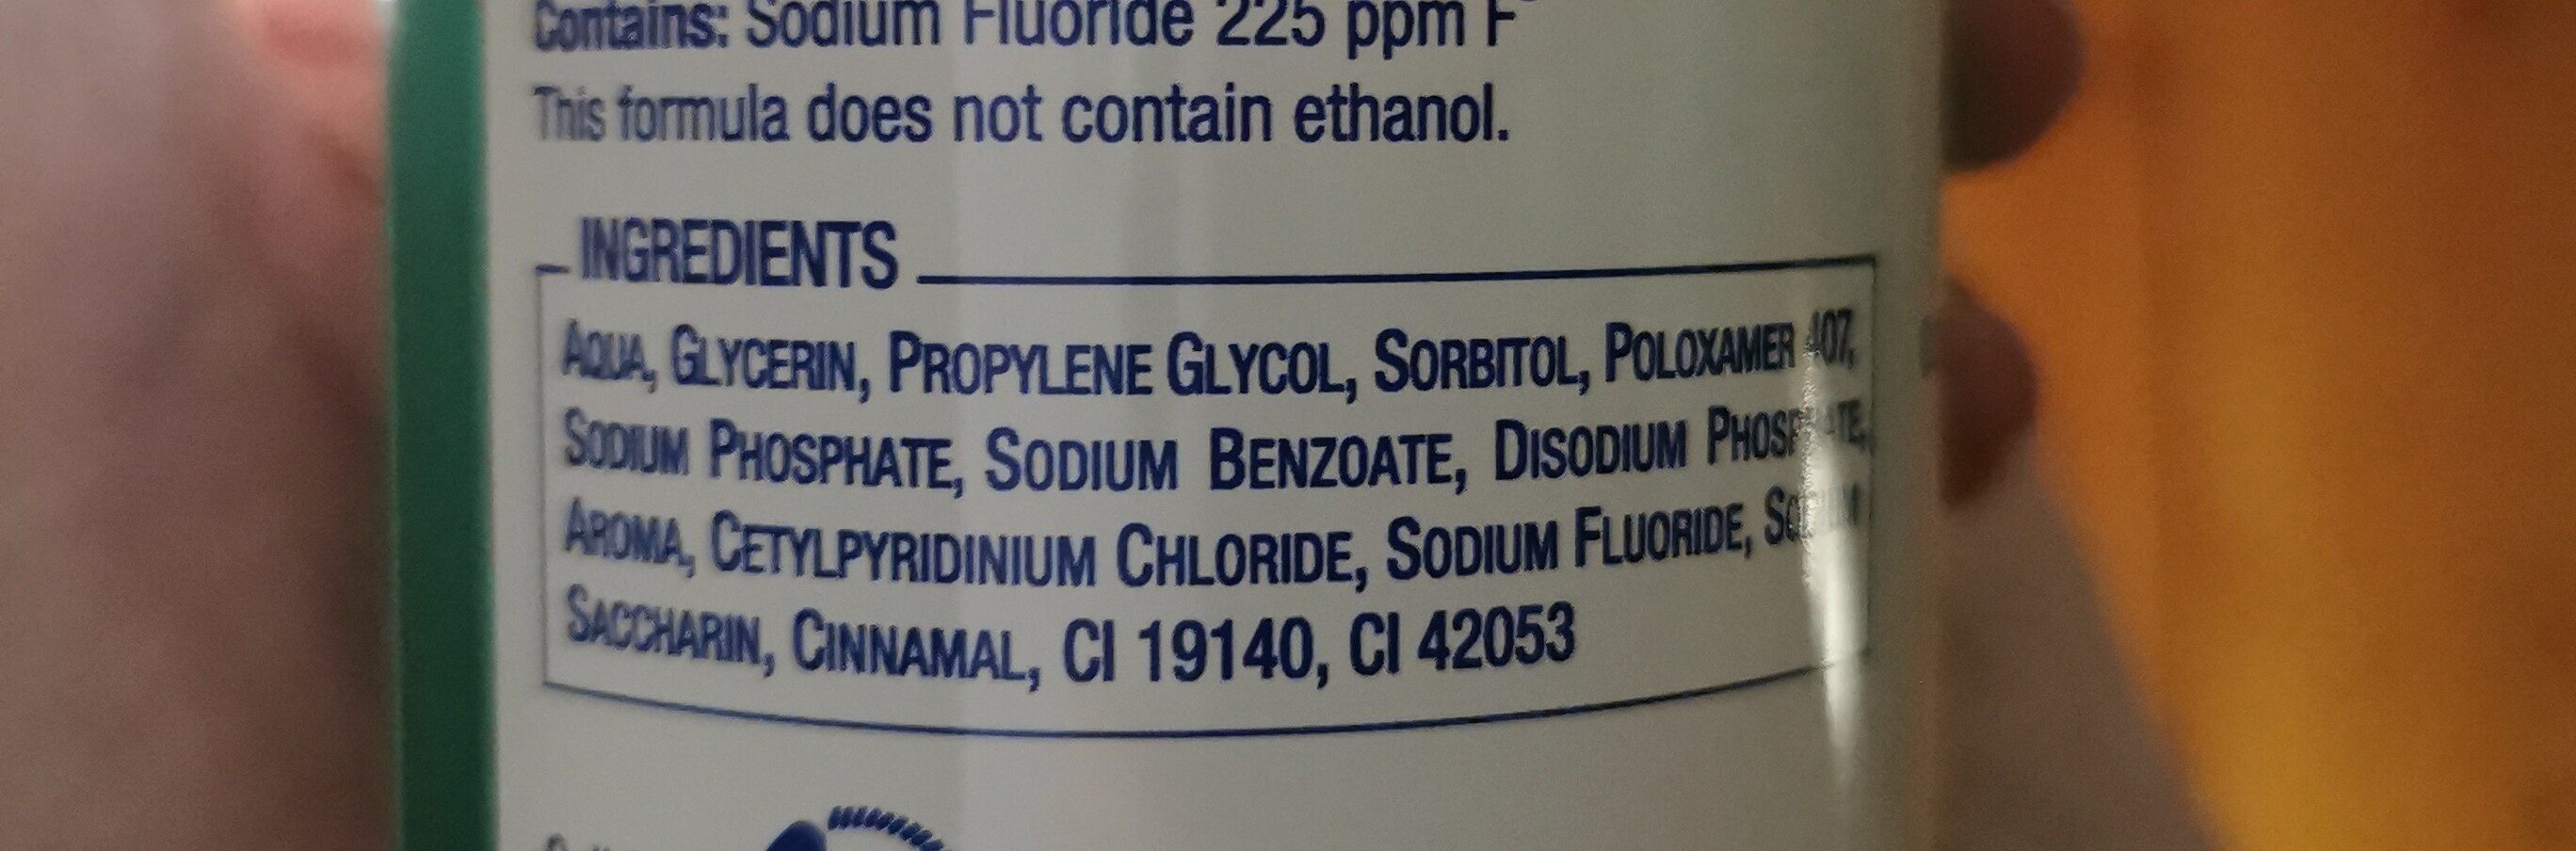 Flourigard fluoride rinse - Inhaltsstoffe - en